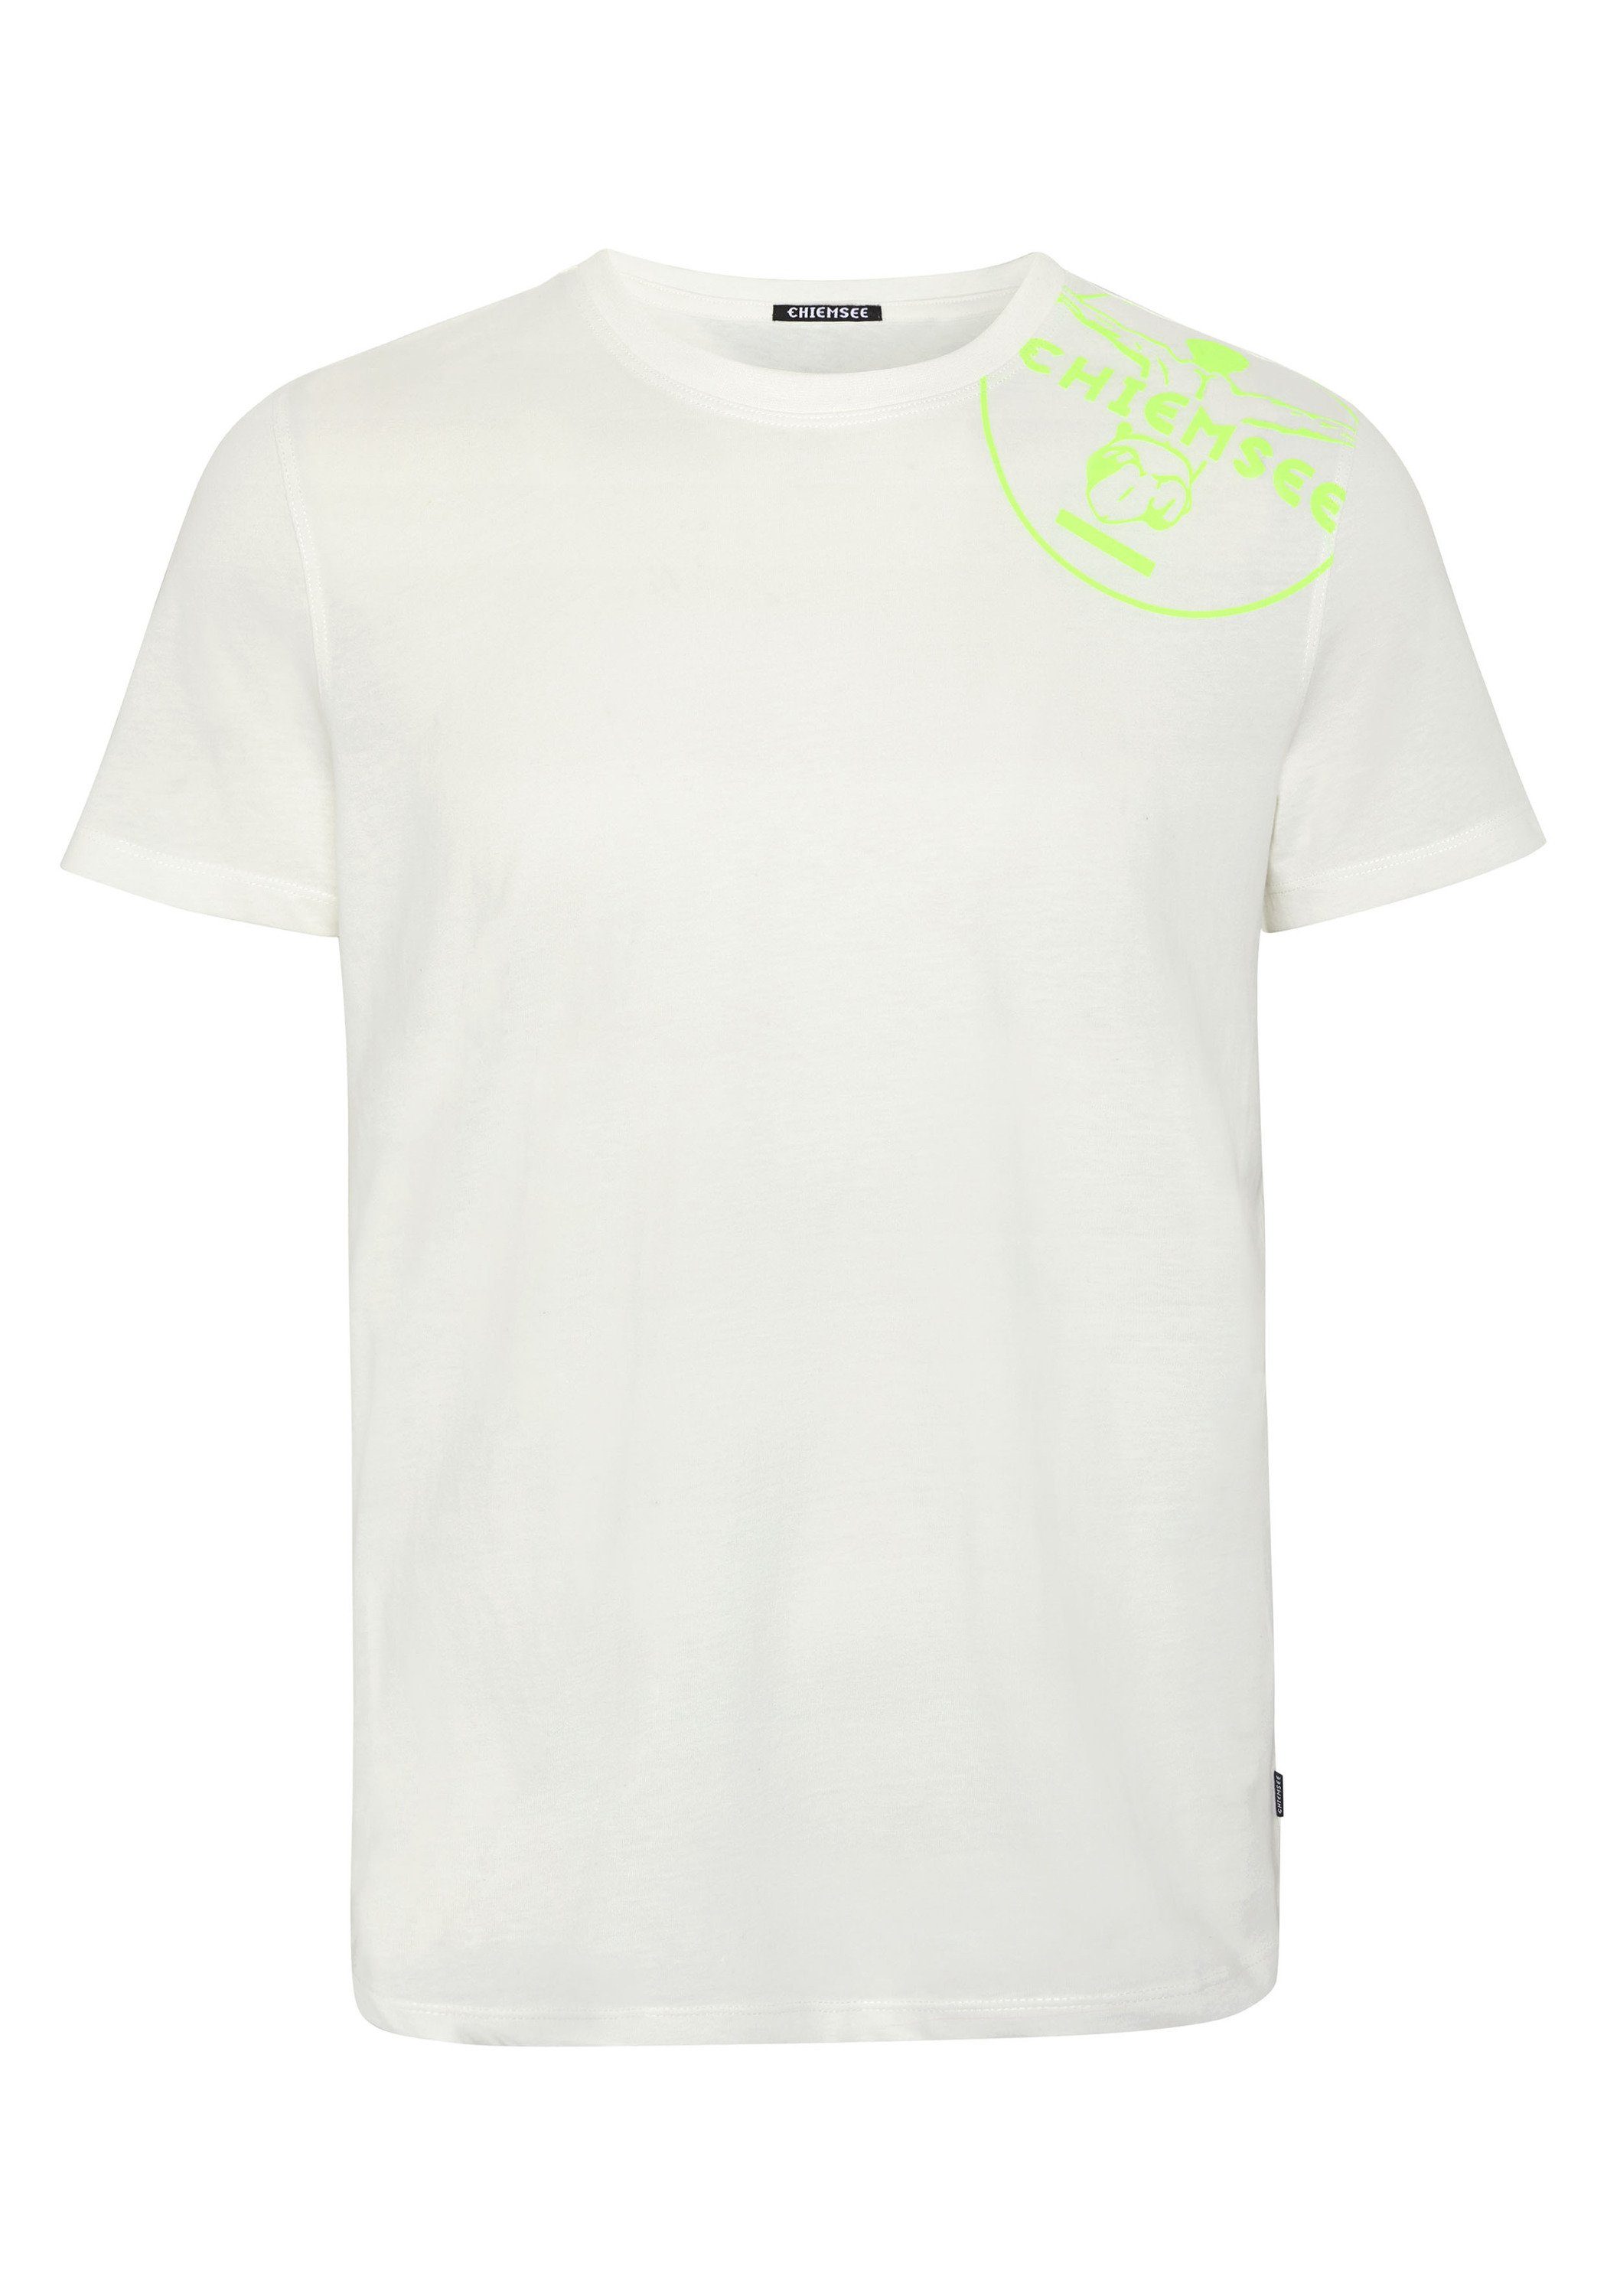 Chiemsee Print-Shirt T-Shirt Jumper-Motiv 1 Star White mit